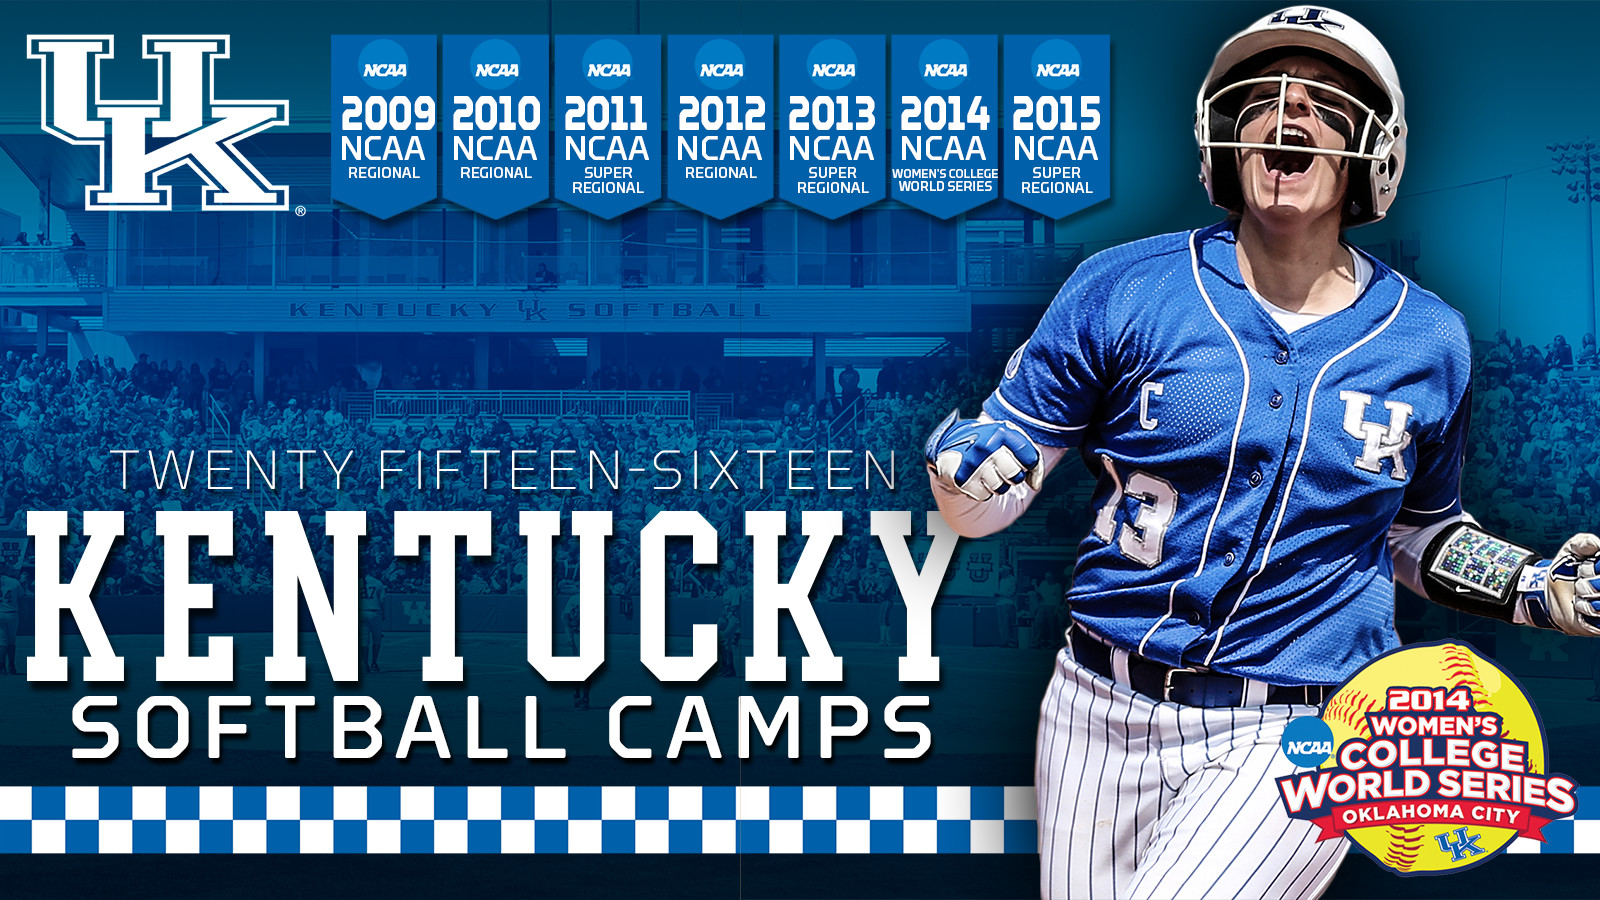 2015-16 Kentucky Softball Camps